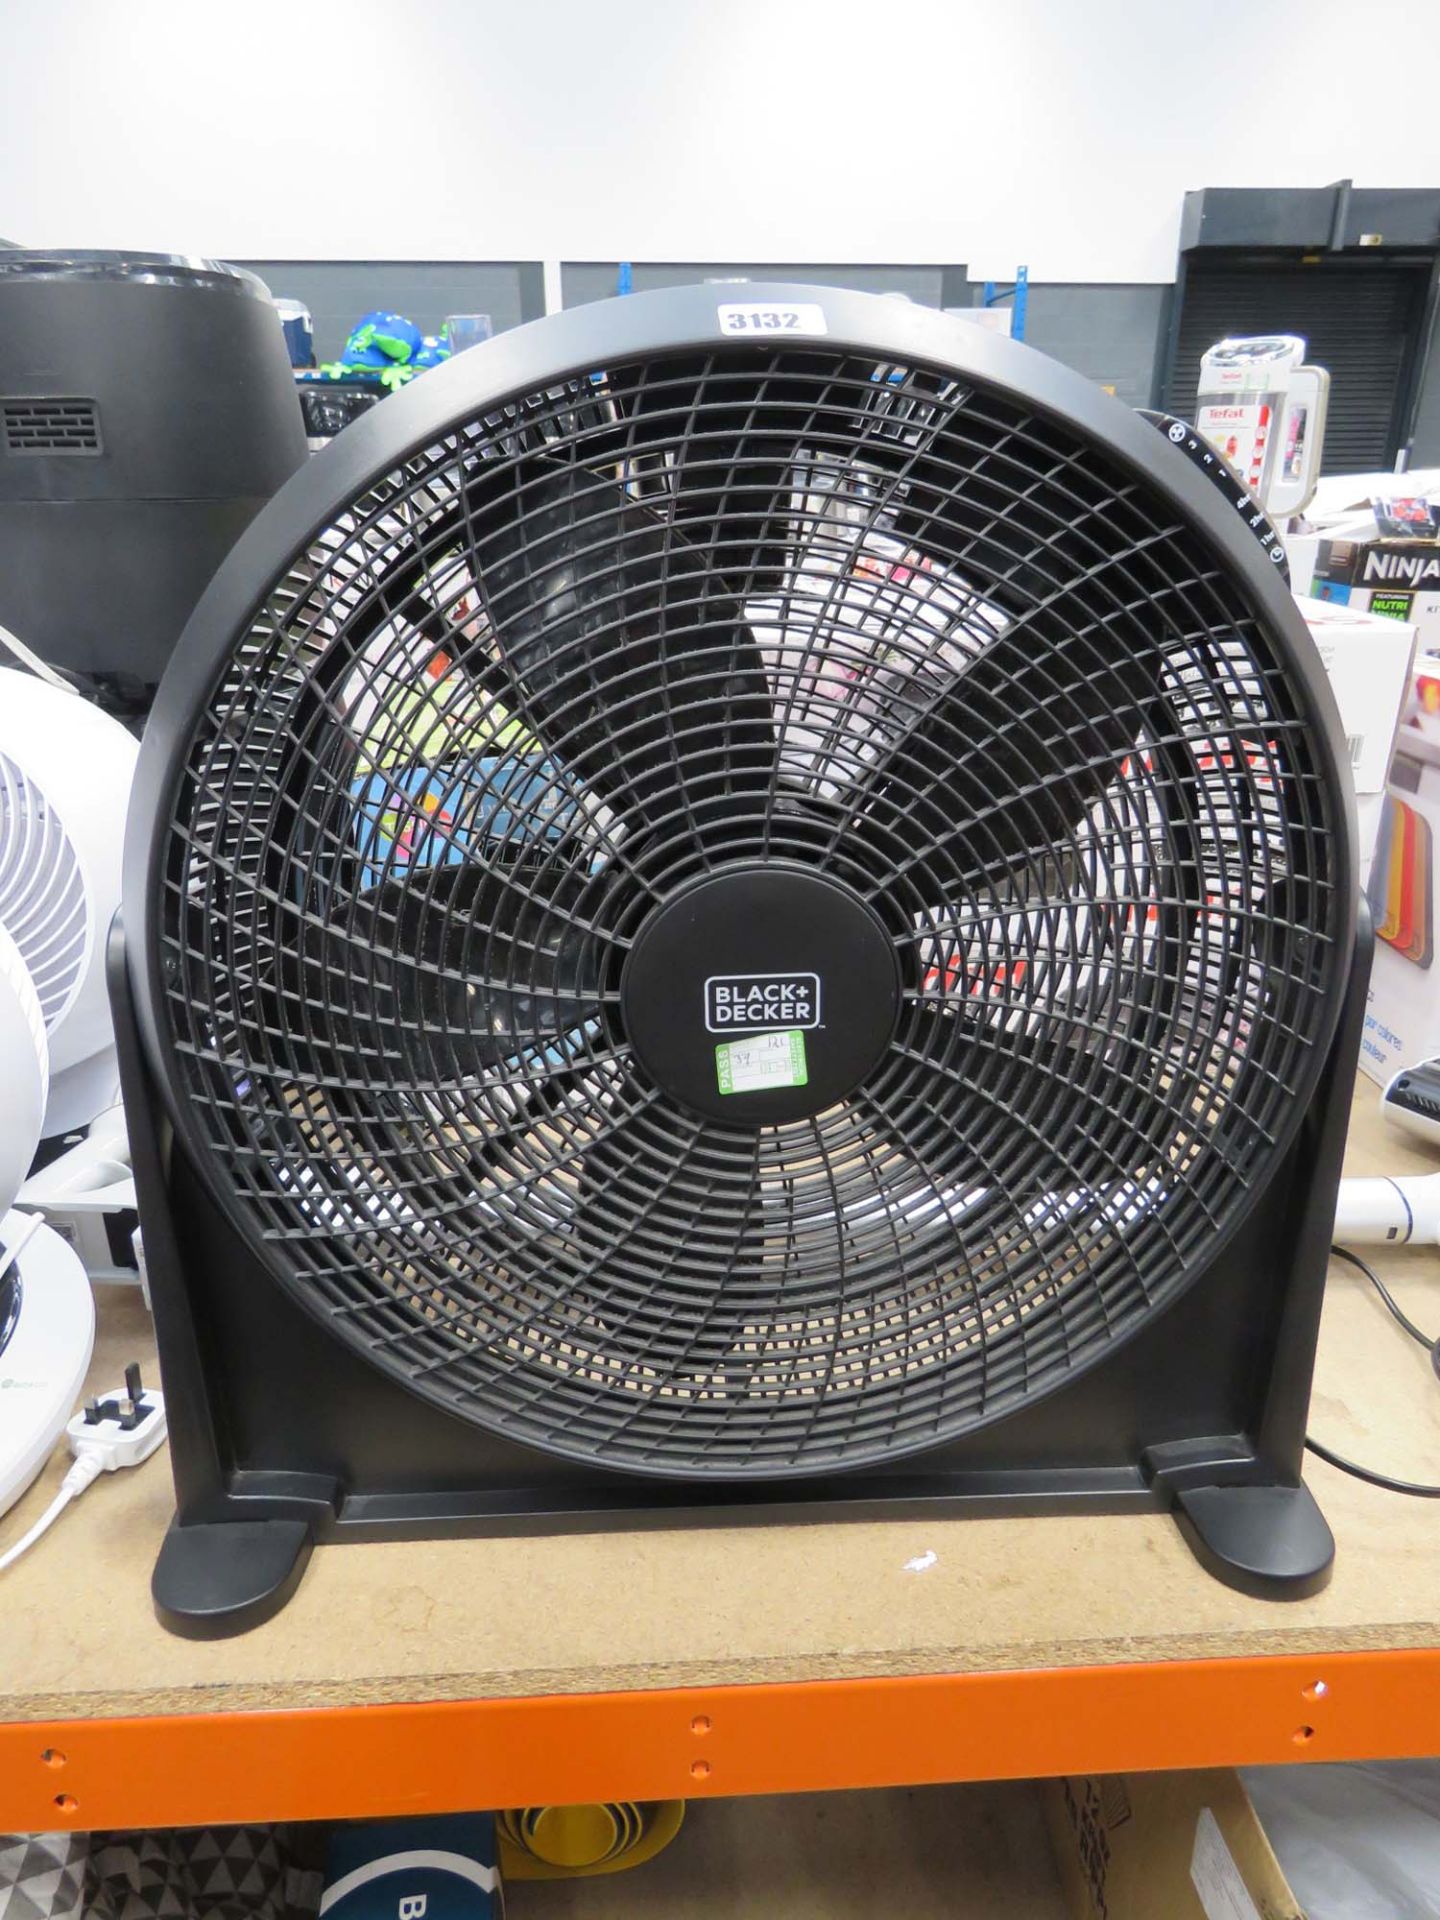 Black and Decker large circular fan